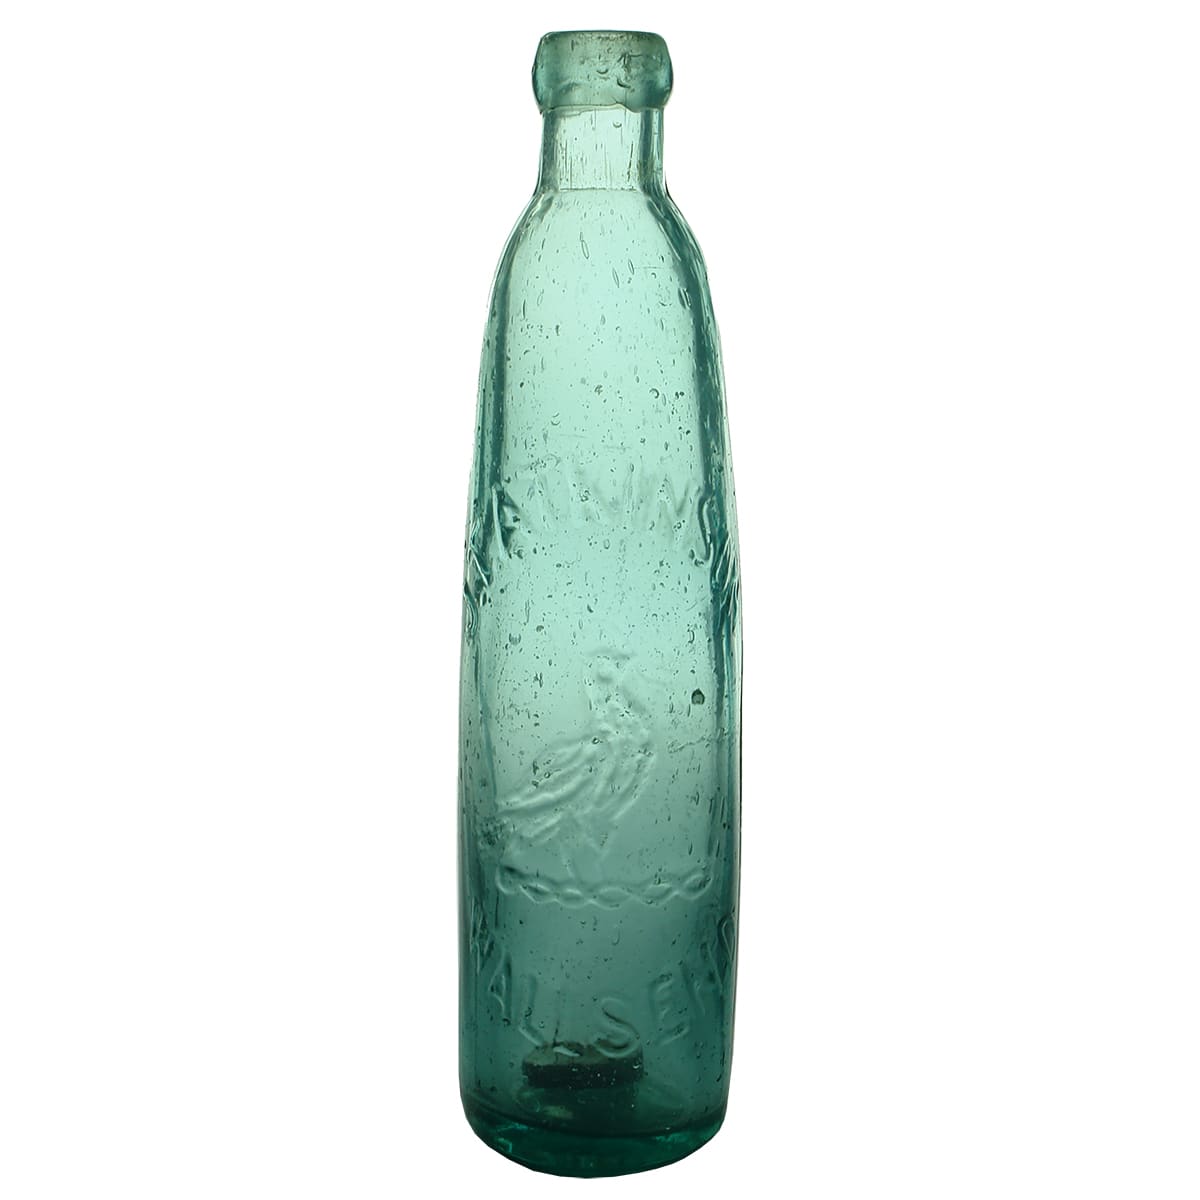 Stick Bottle. Atkinson, Wallsend. 10 oz. Aqua. (New South Wales)